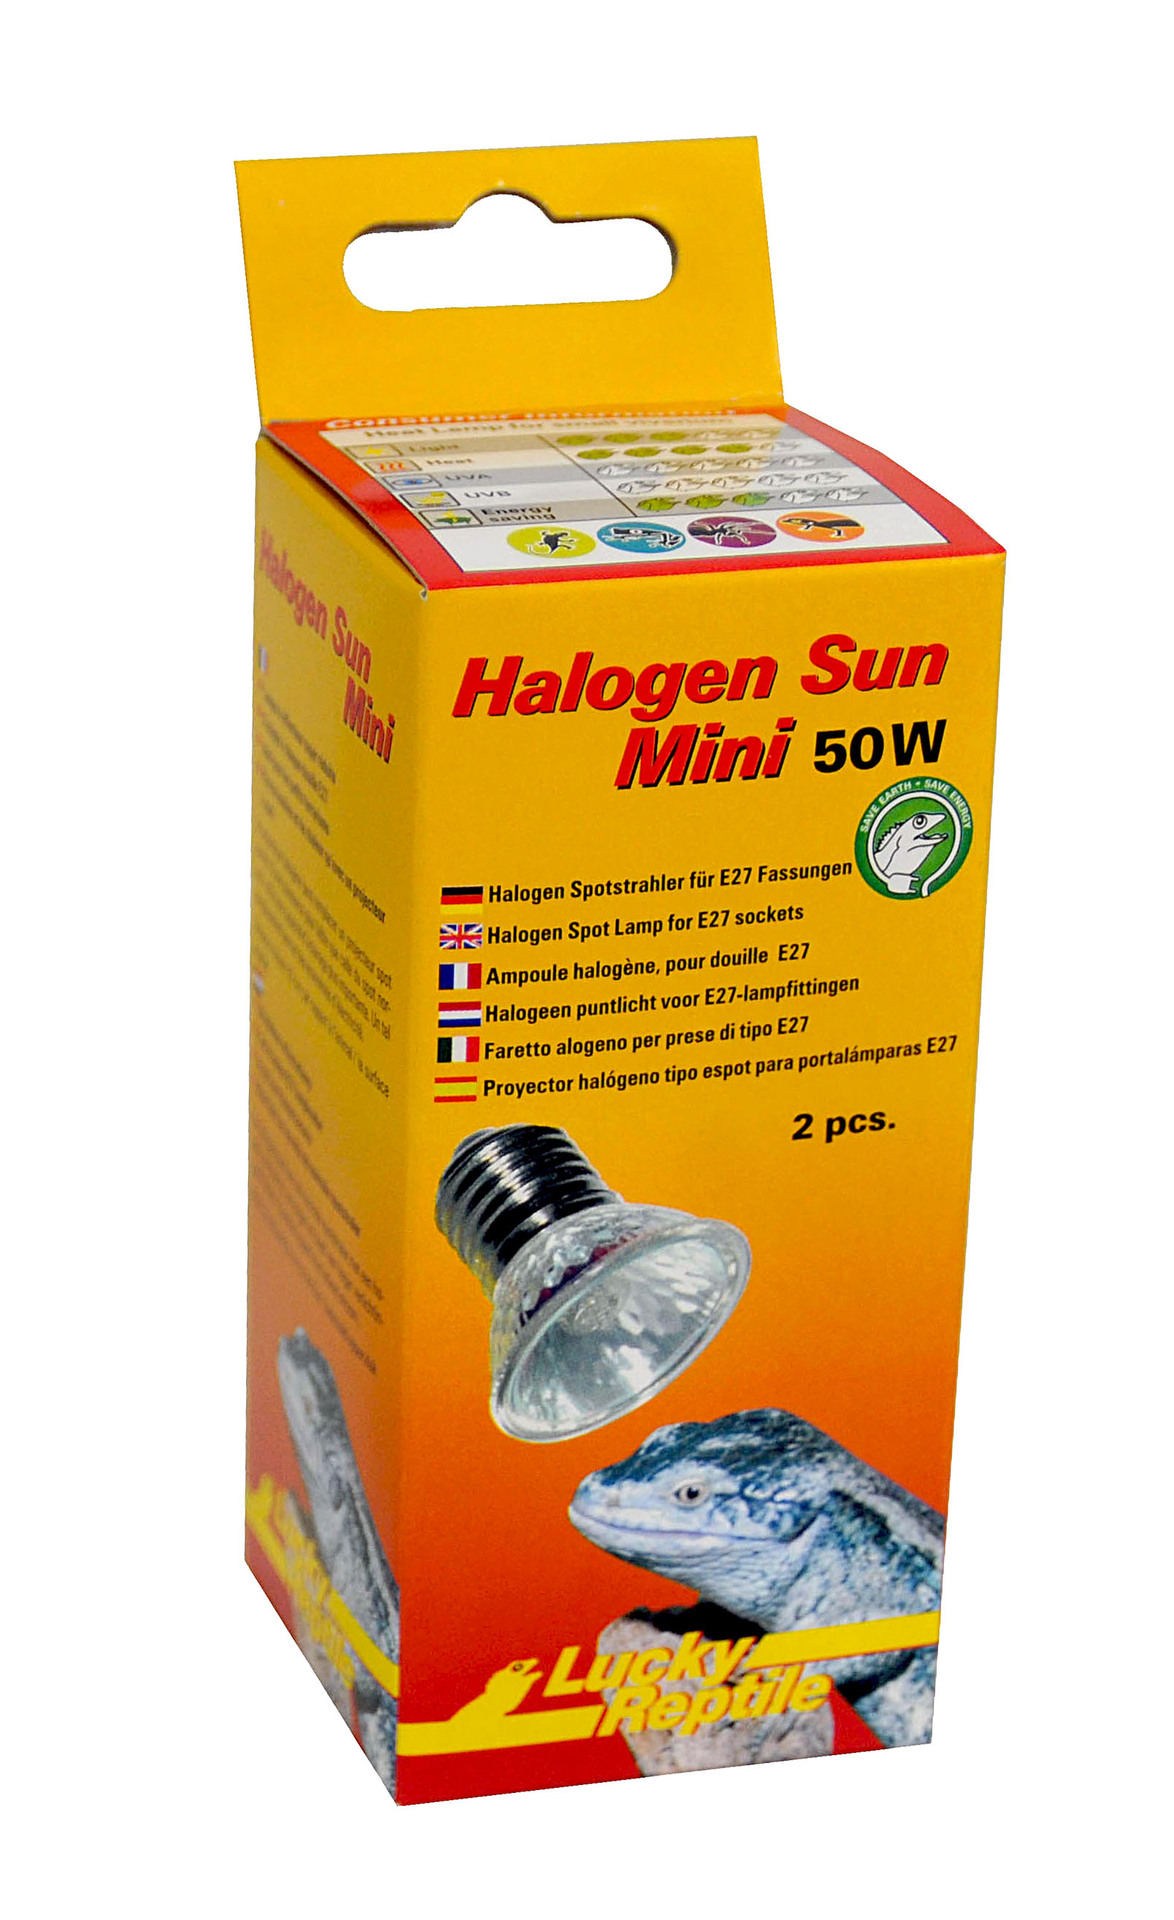 Import-Export Peter Hoch GmbH Halogen Sun Mini Doppelpackung